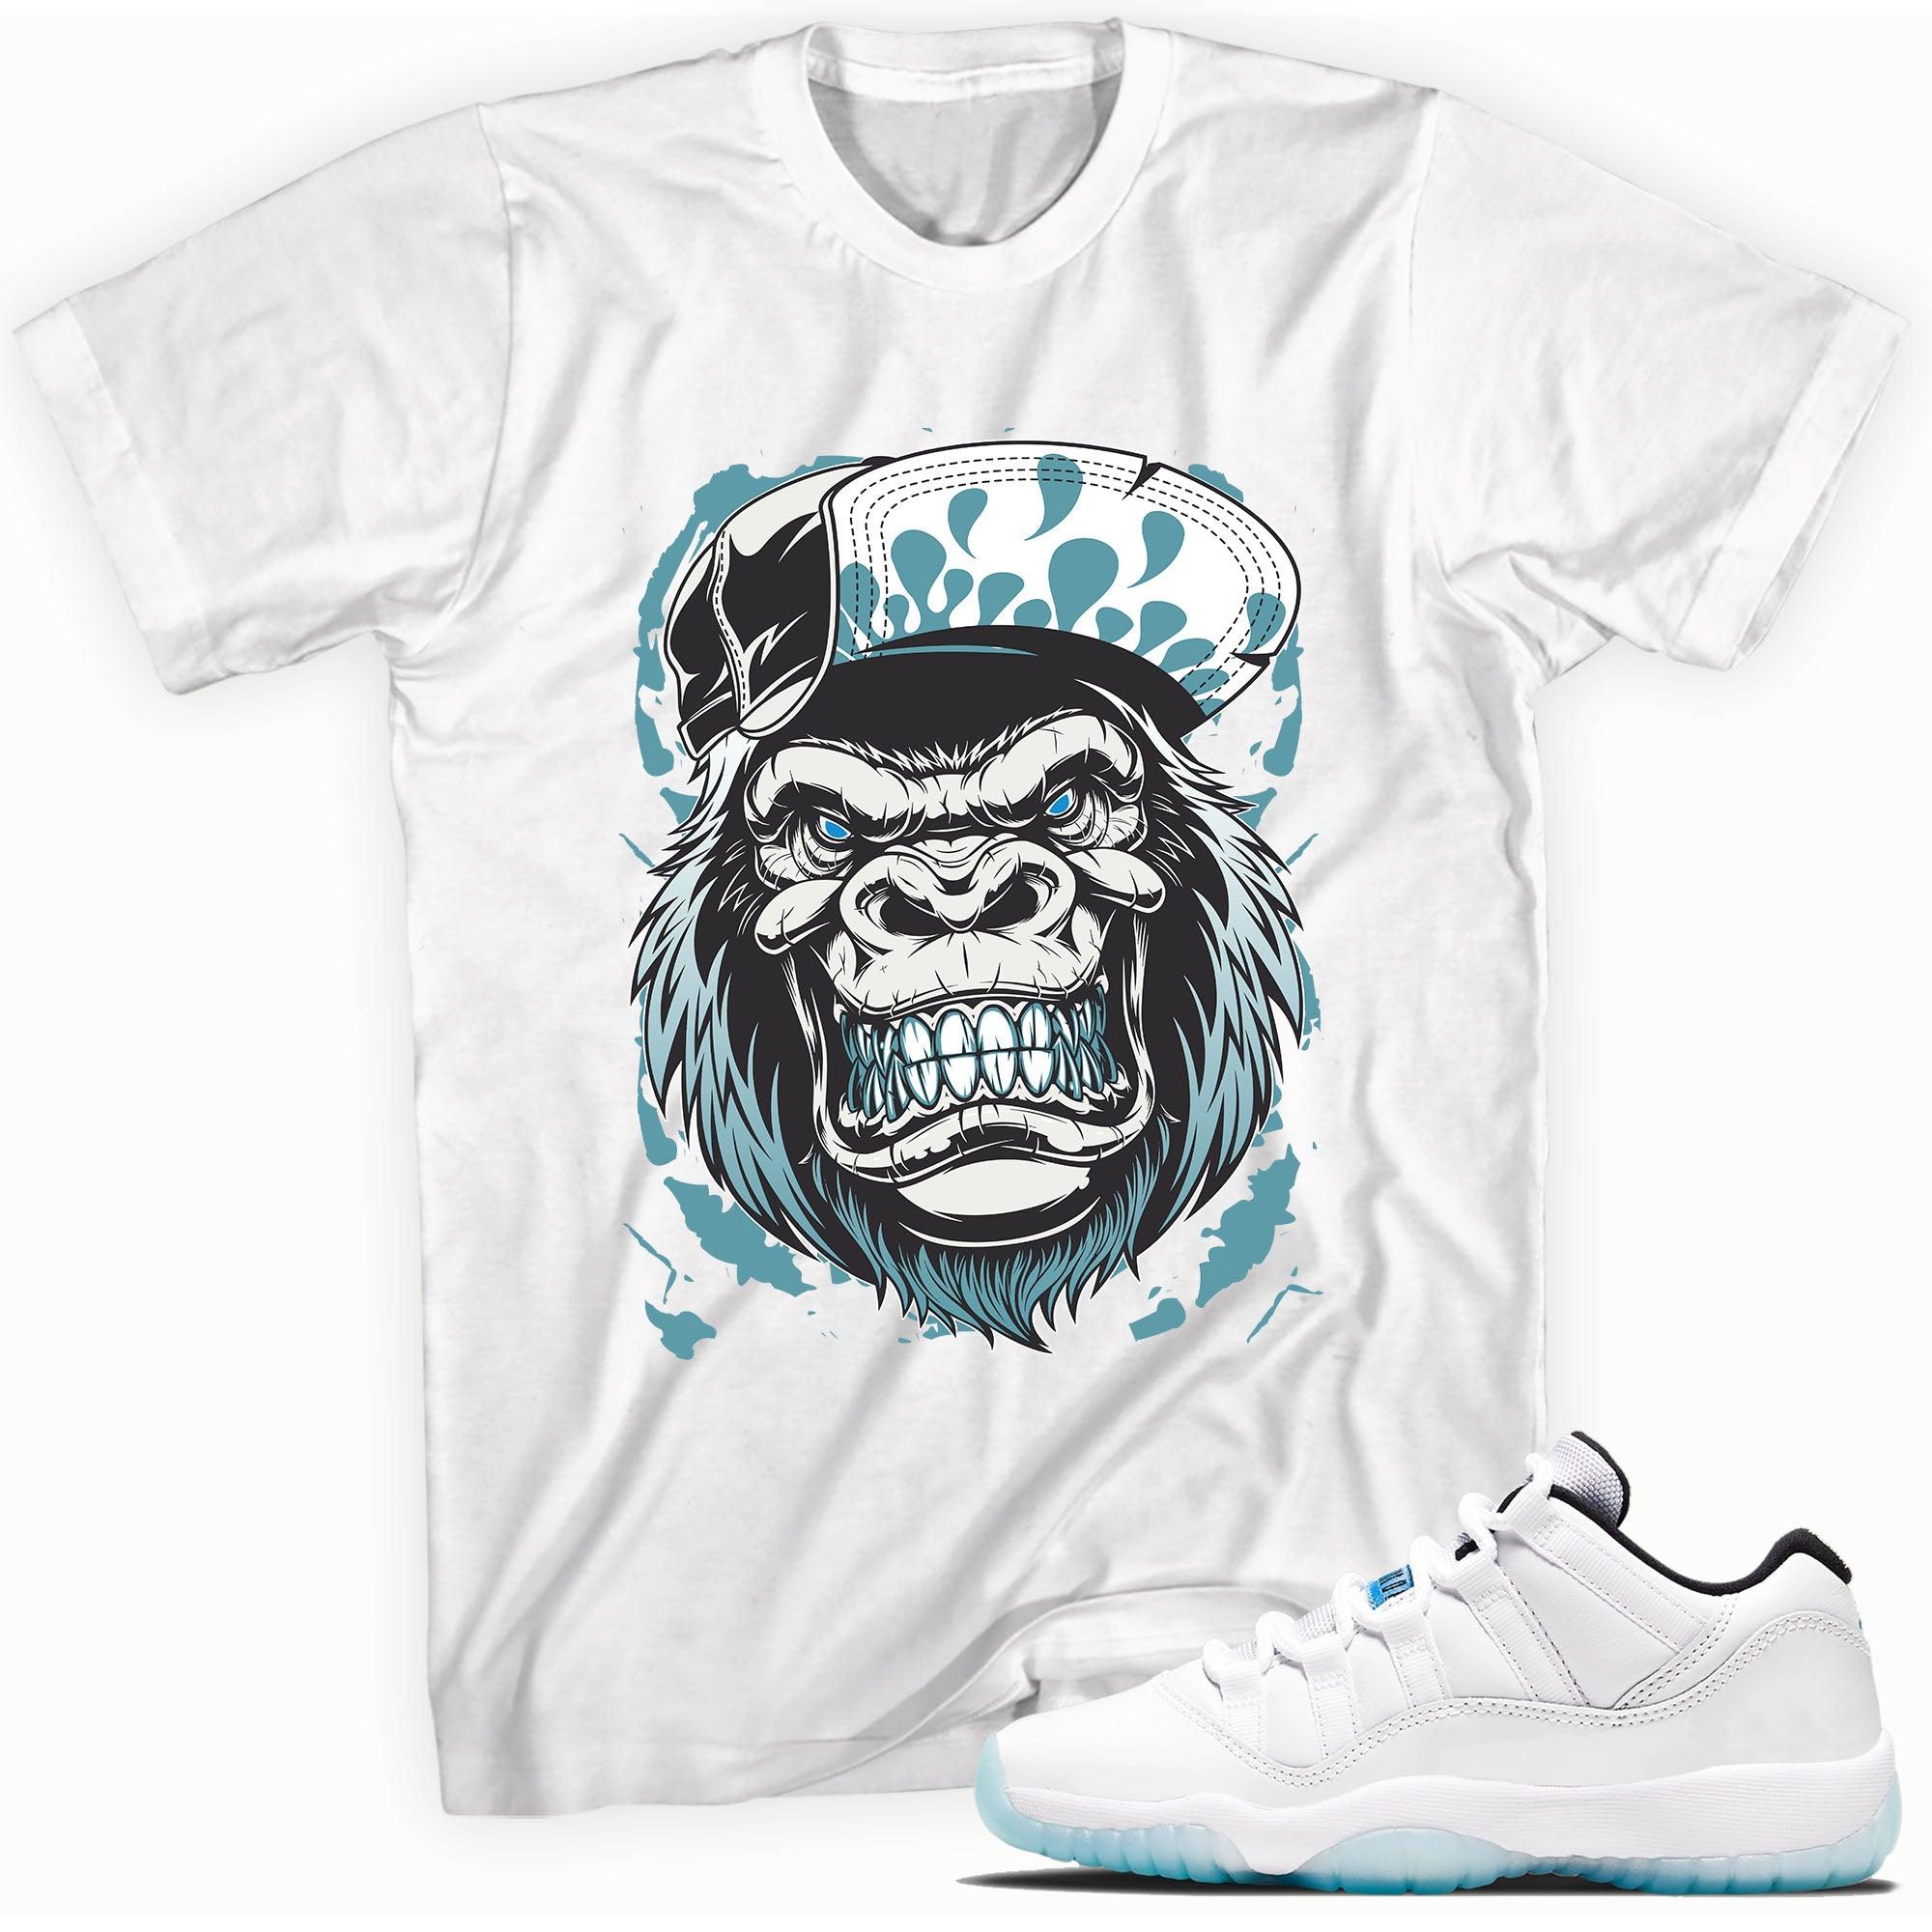 Gorilla Beast Shirt AJ 11s Retro Low Legend Blue photo